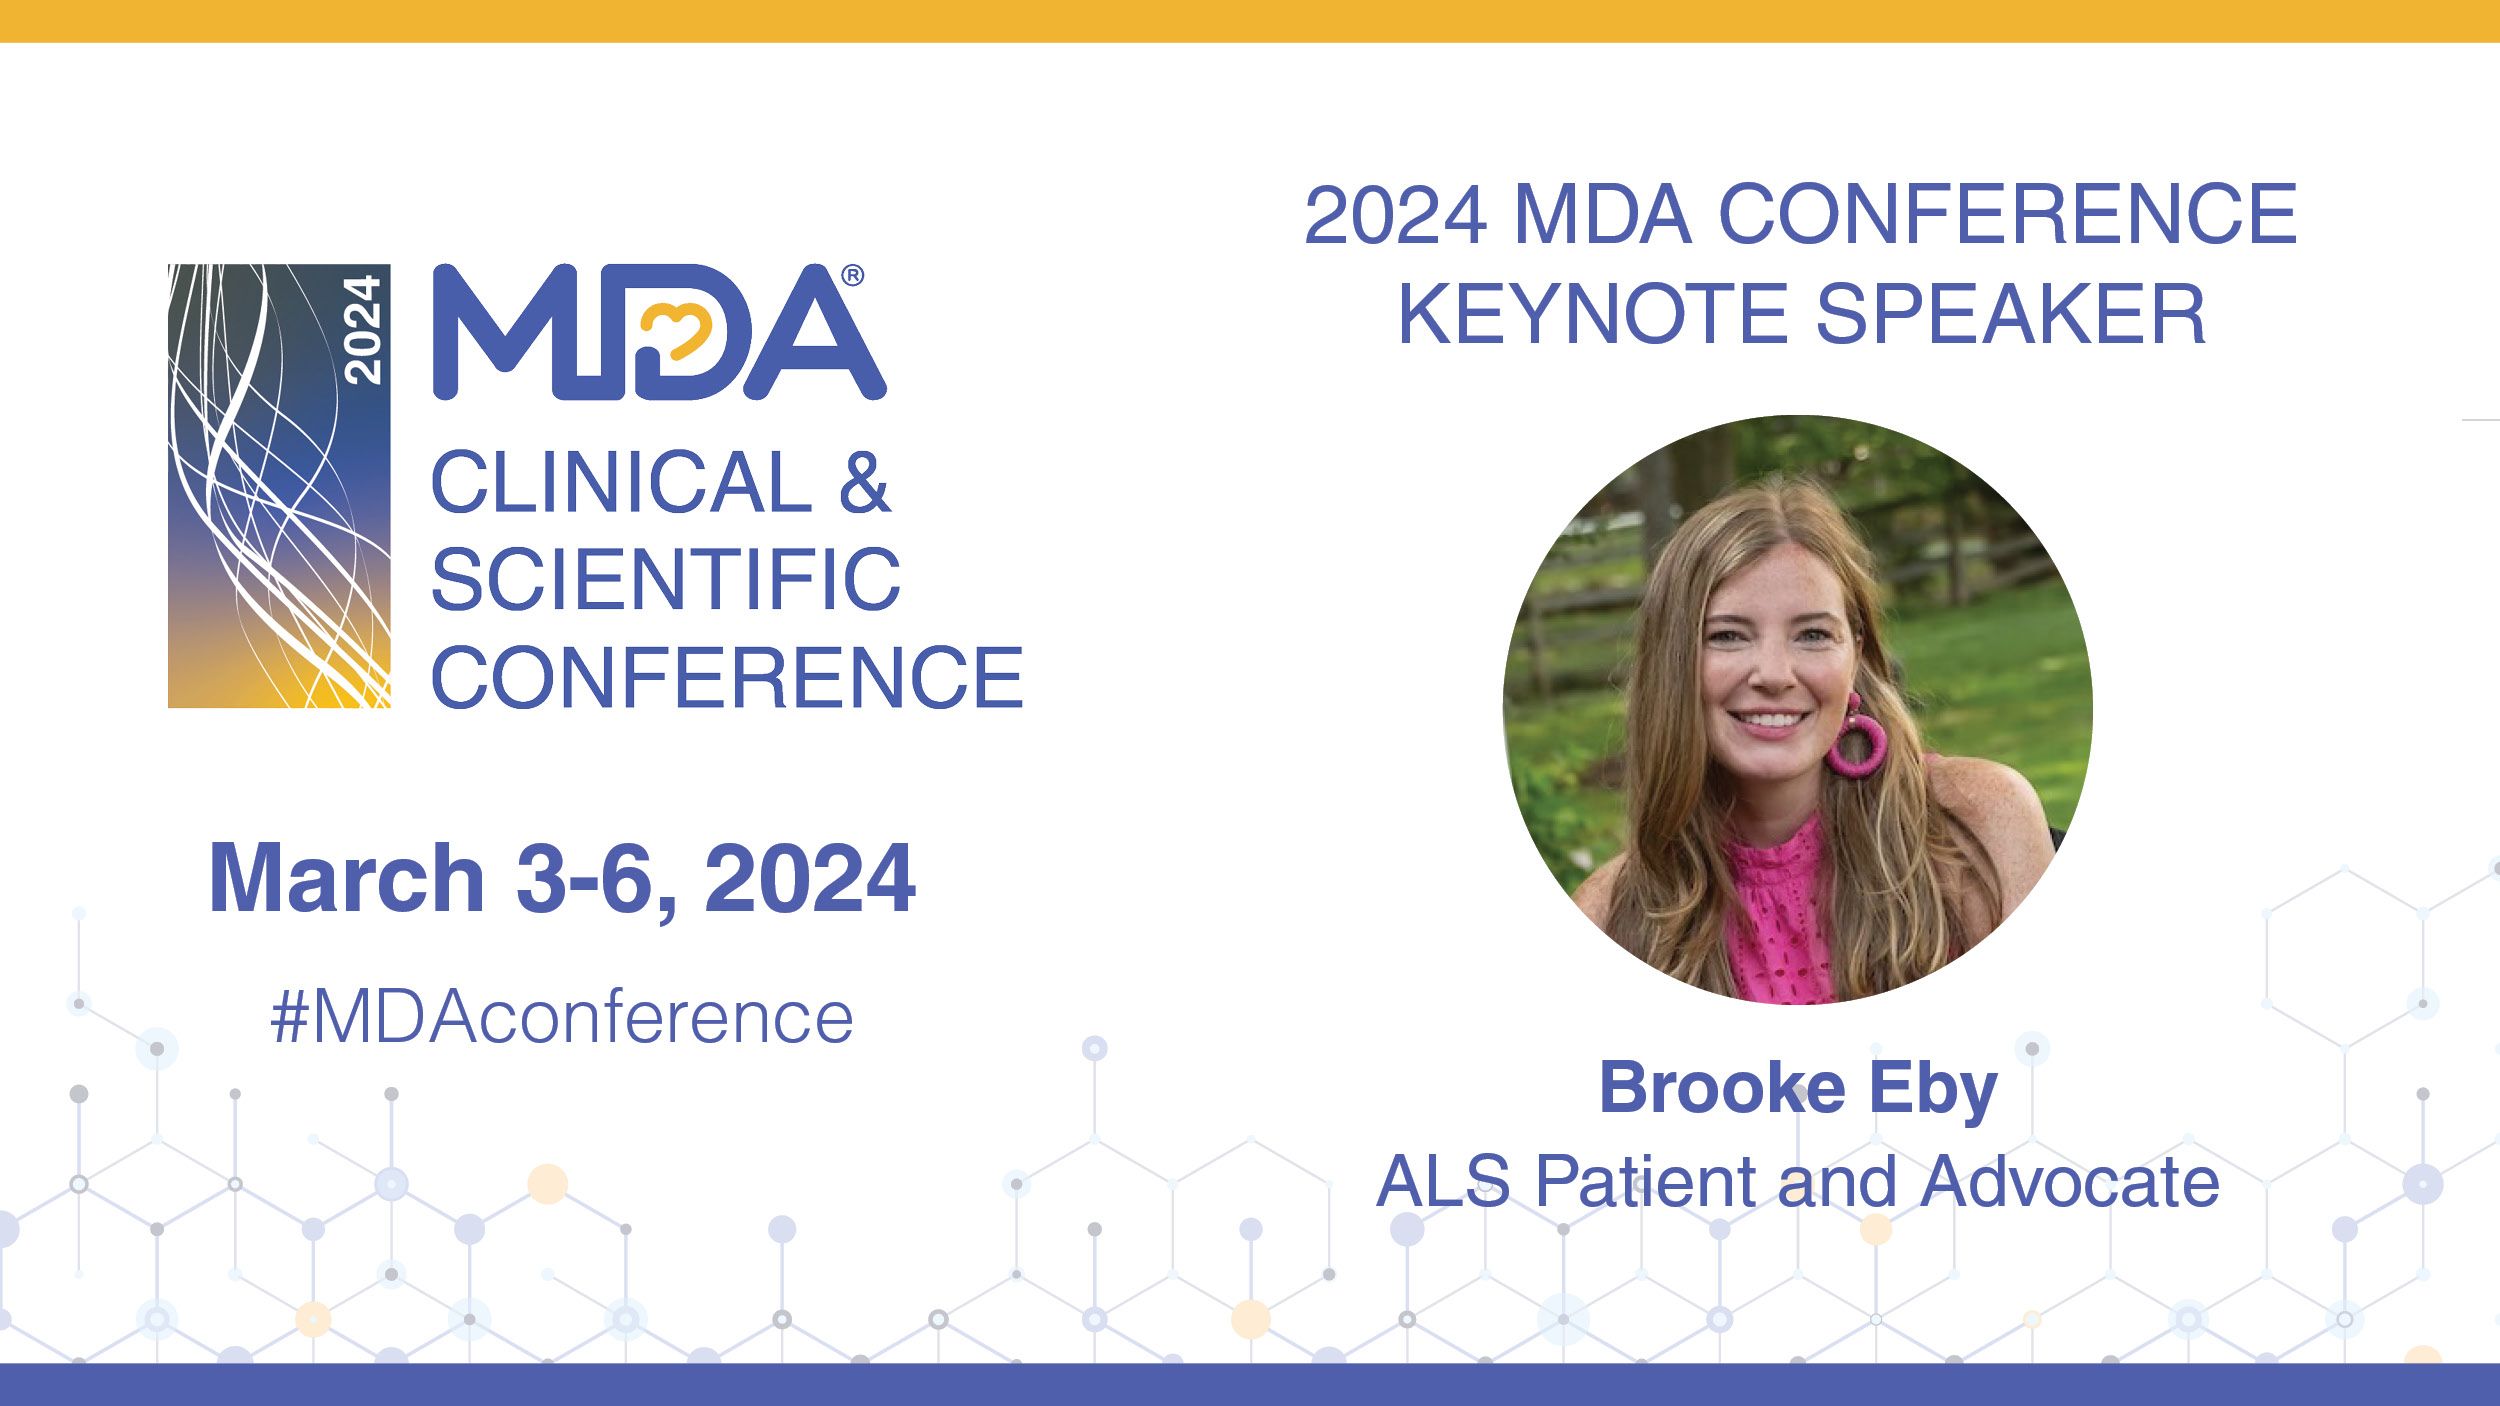 2024 MDA Clinical & Scientific Conference Keynote Speaker is Brooke Eby